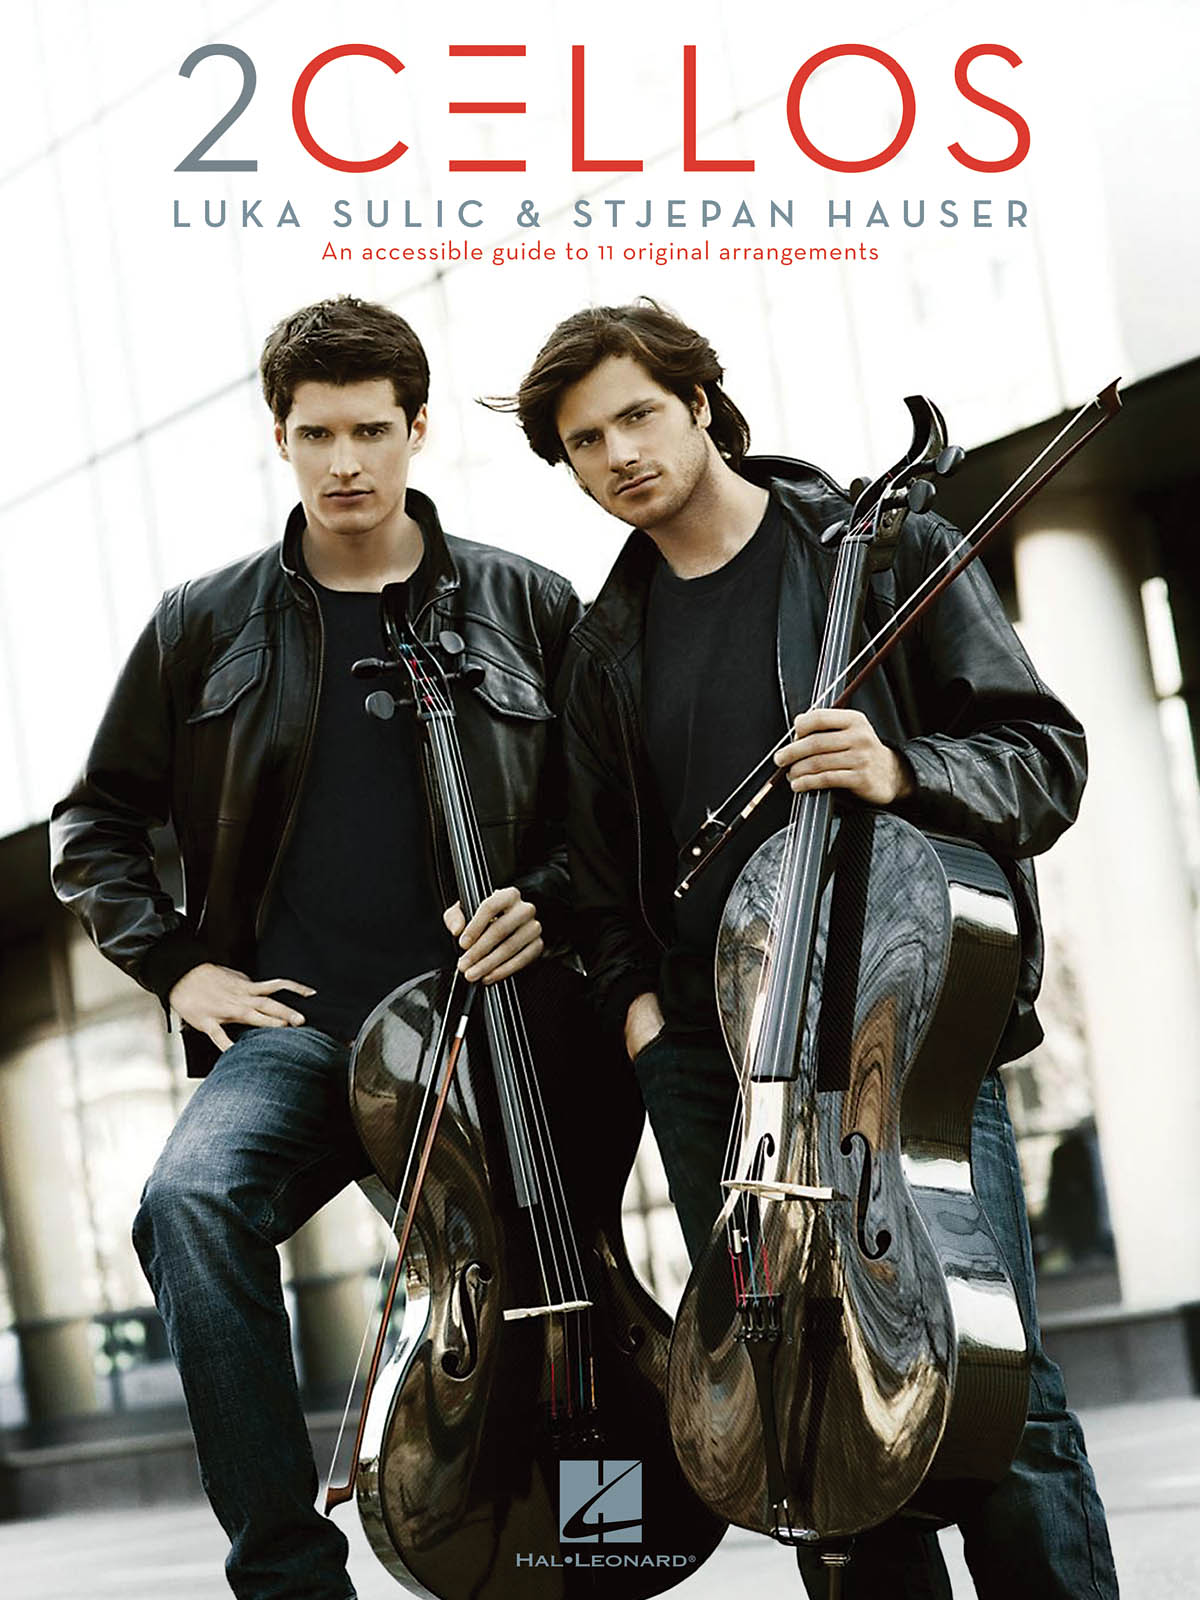 2Cellos: Luka Sulic & Stjepan Hauser – Revised Ed.